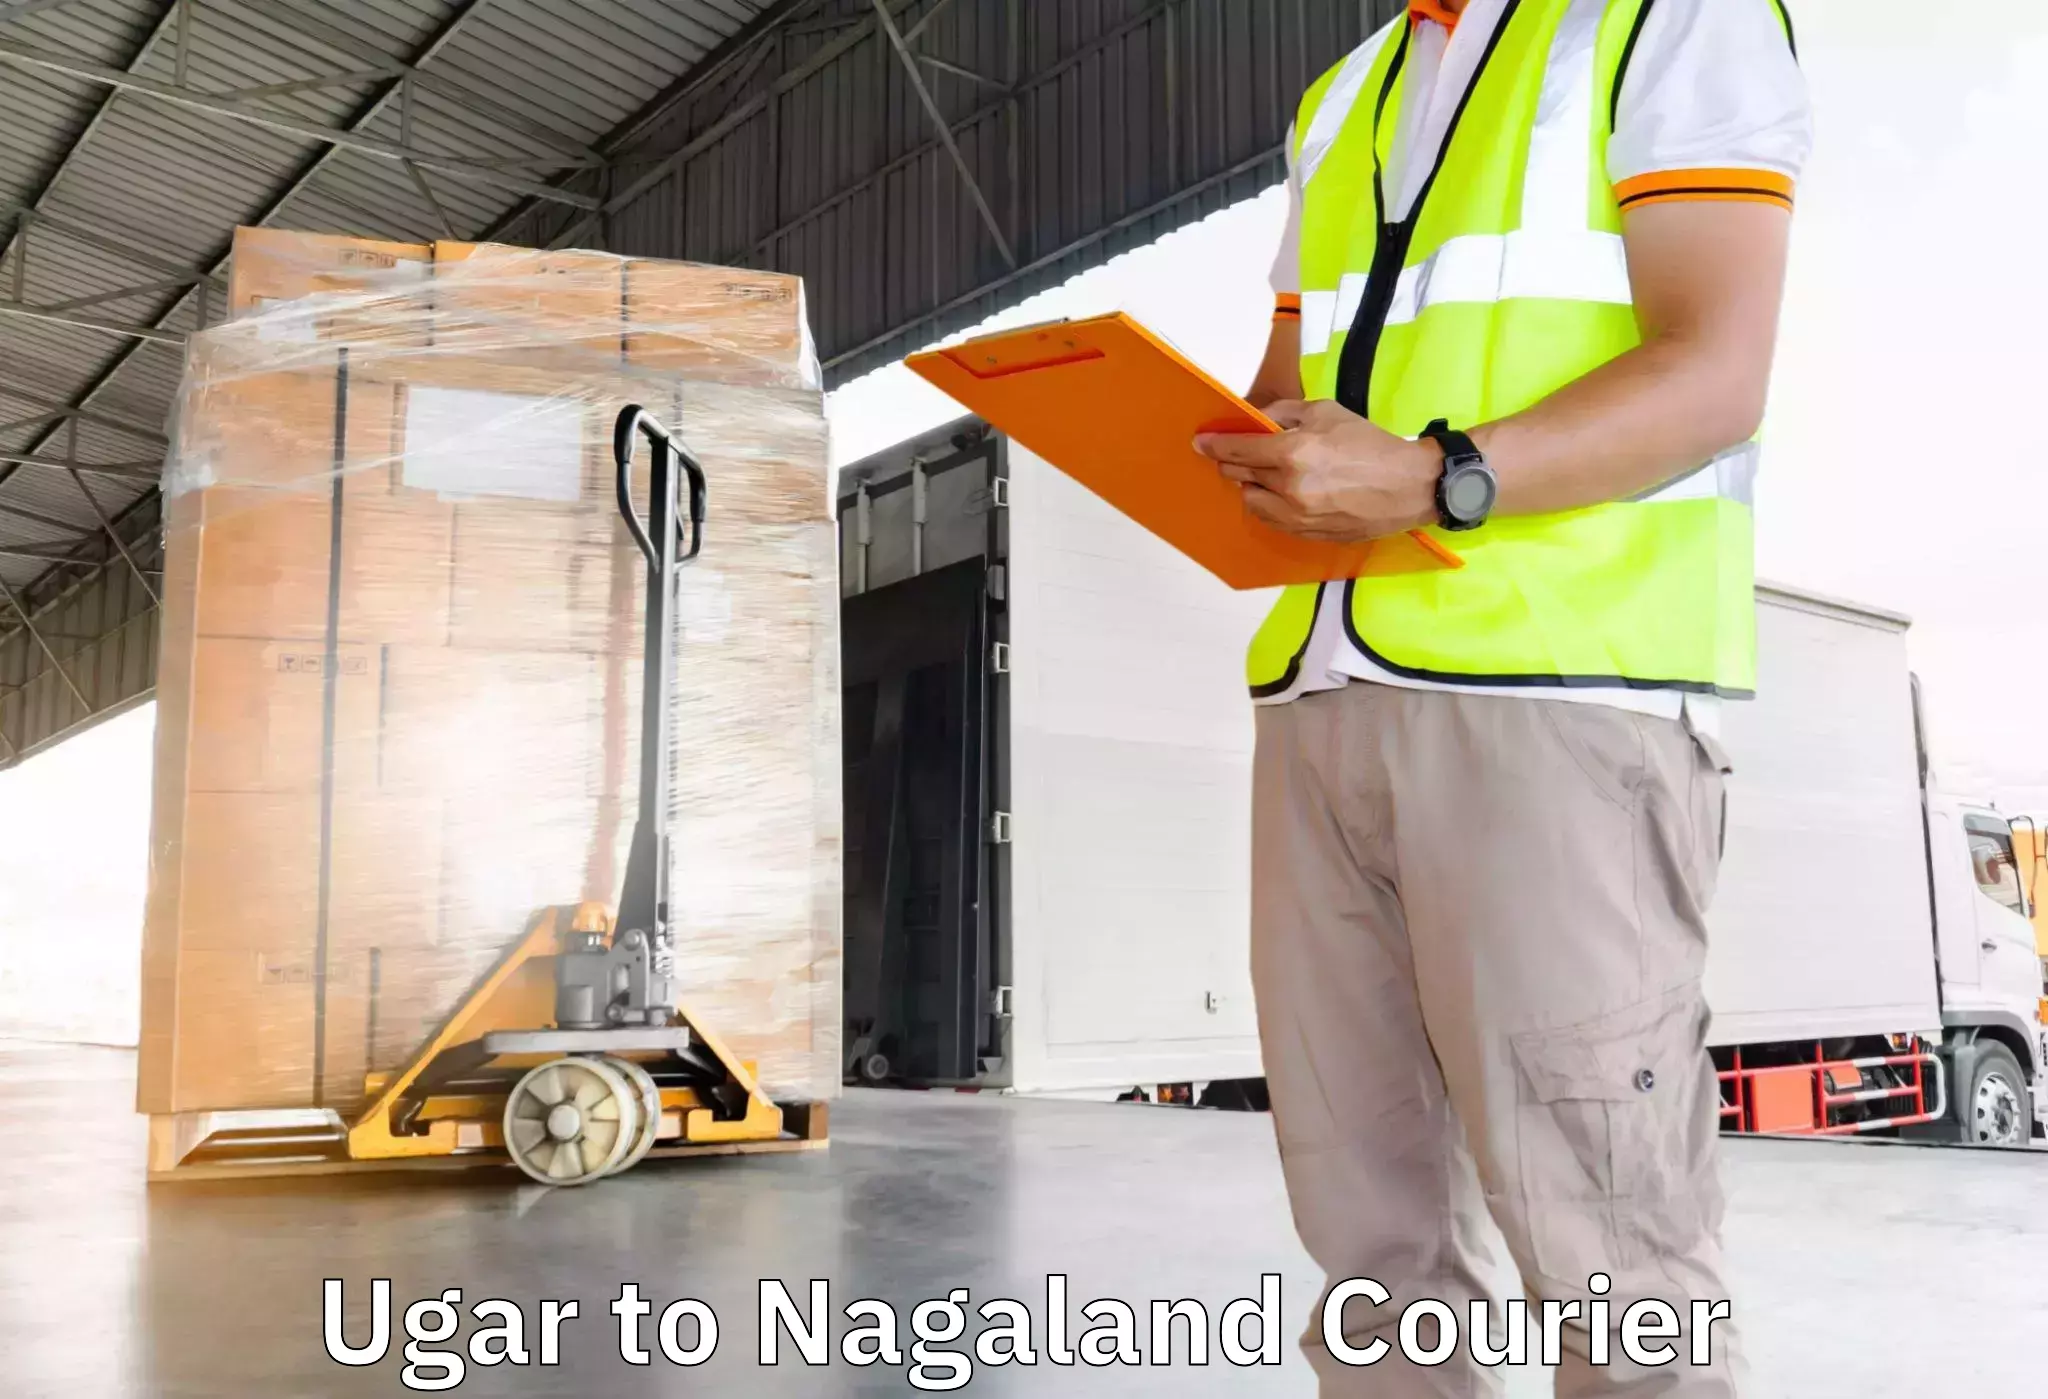 Moving and packing experts Ugar to Nagaland